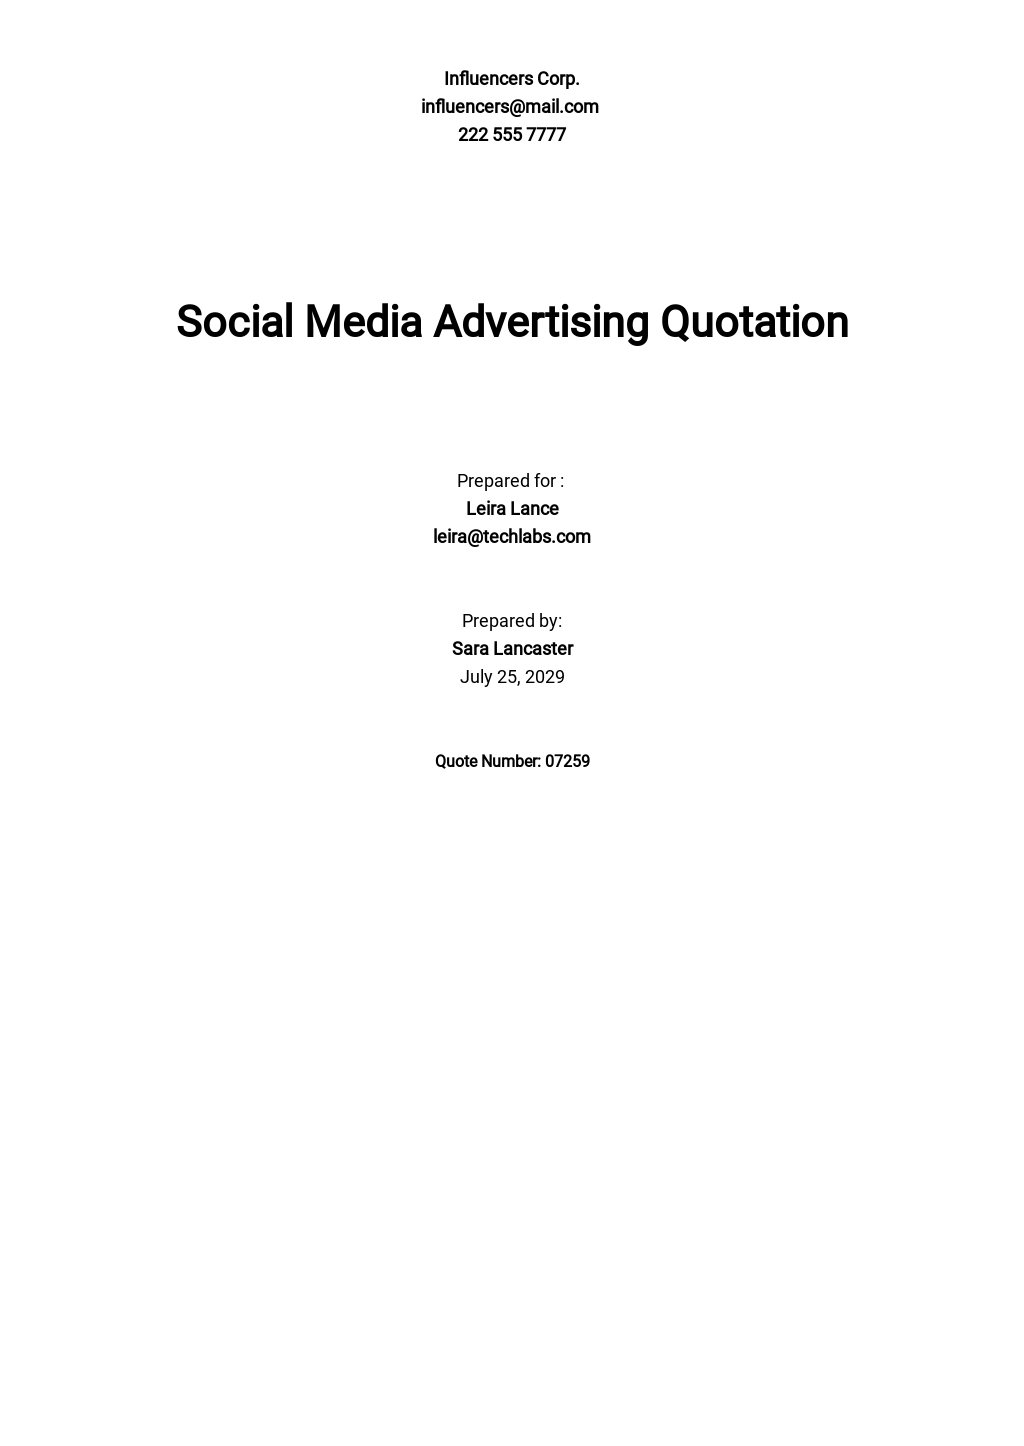 Social Media Advertising Quotation Template - Google Docs, Google Sheets, Excel, Word